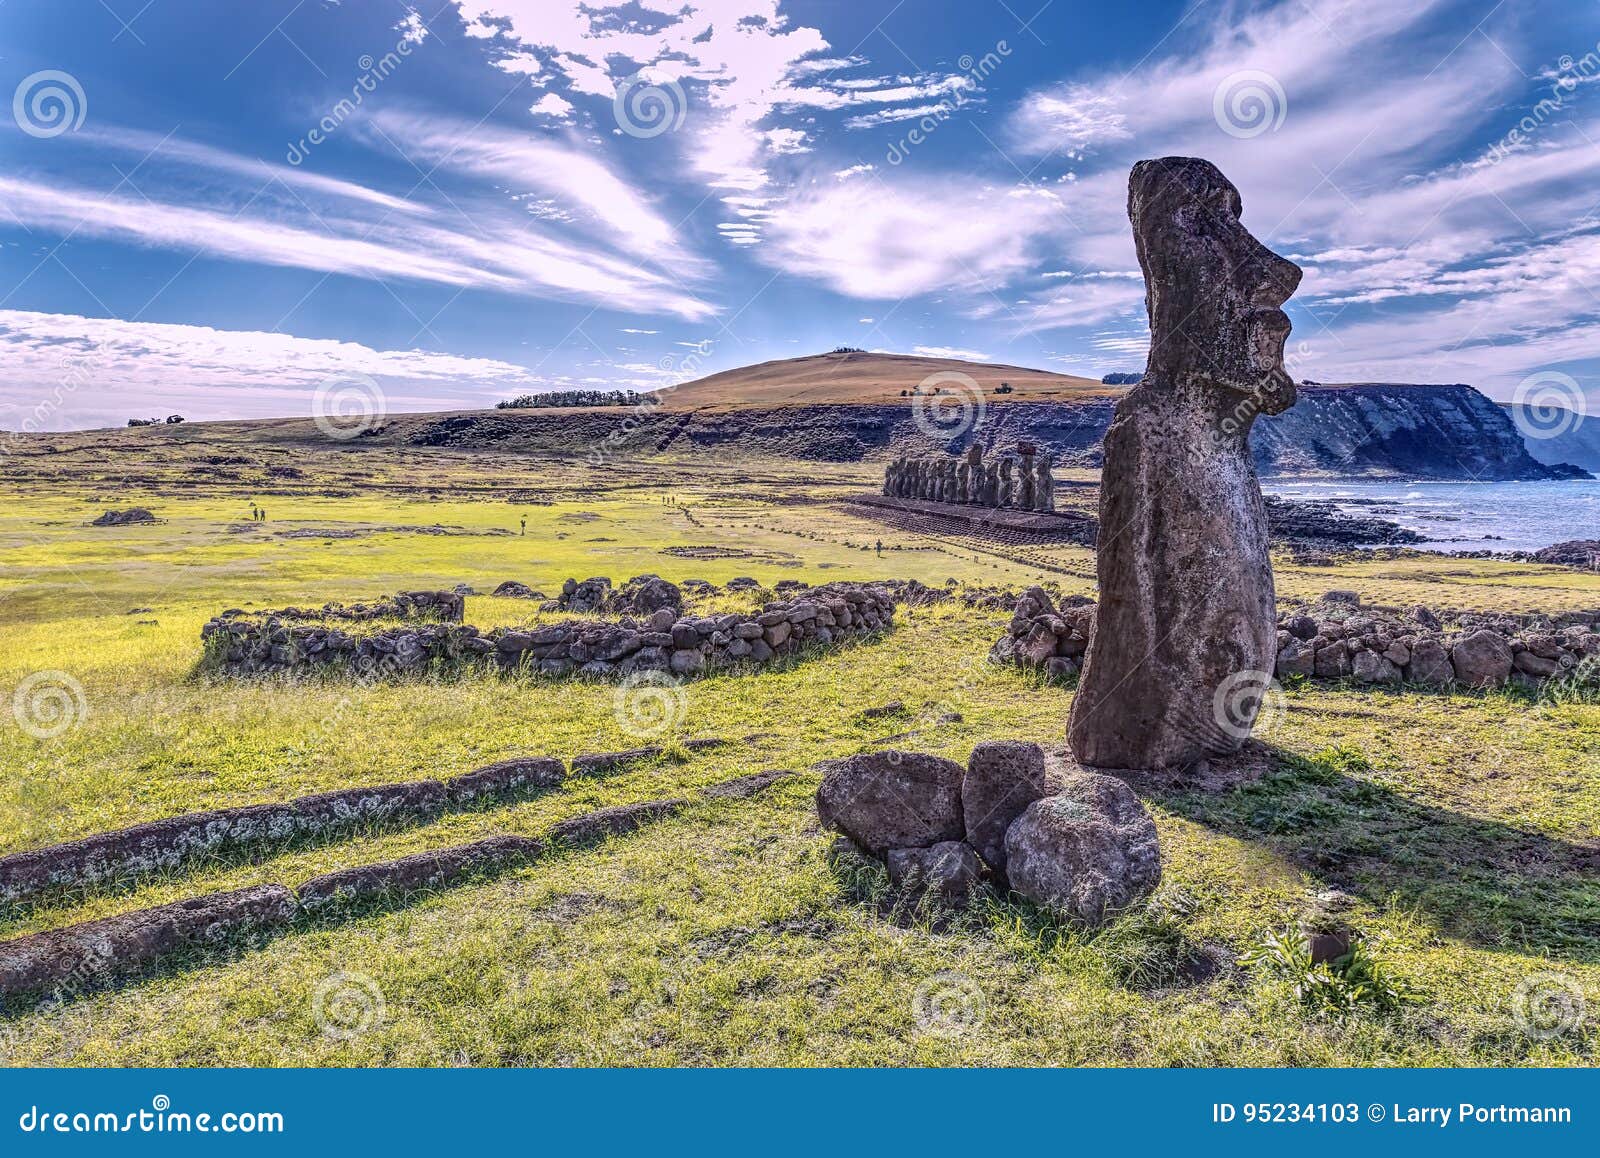 moai in ahu tongariki easter island chile